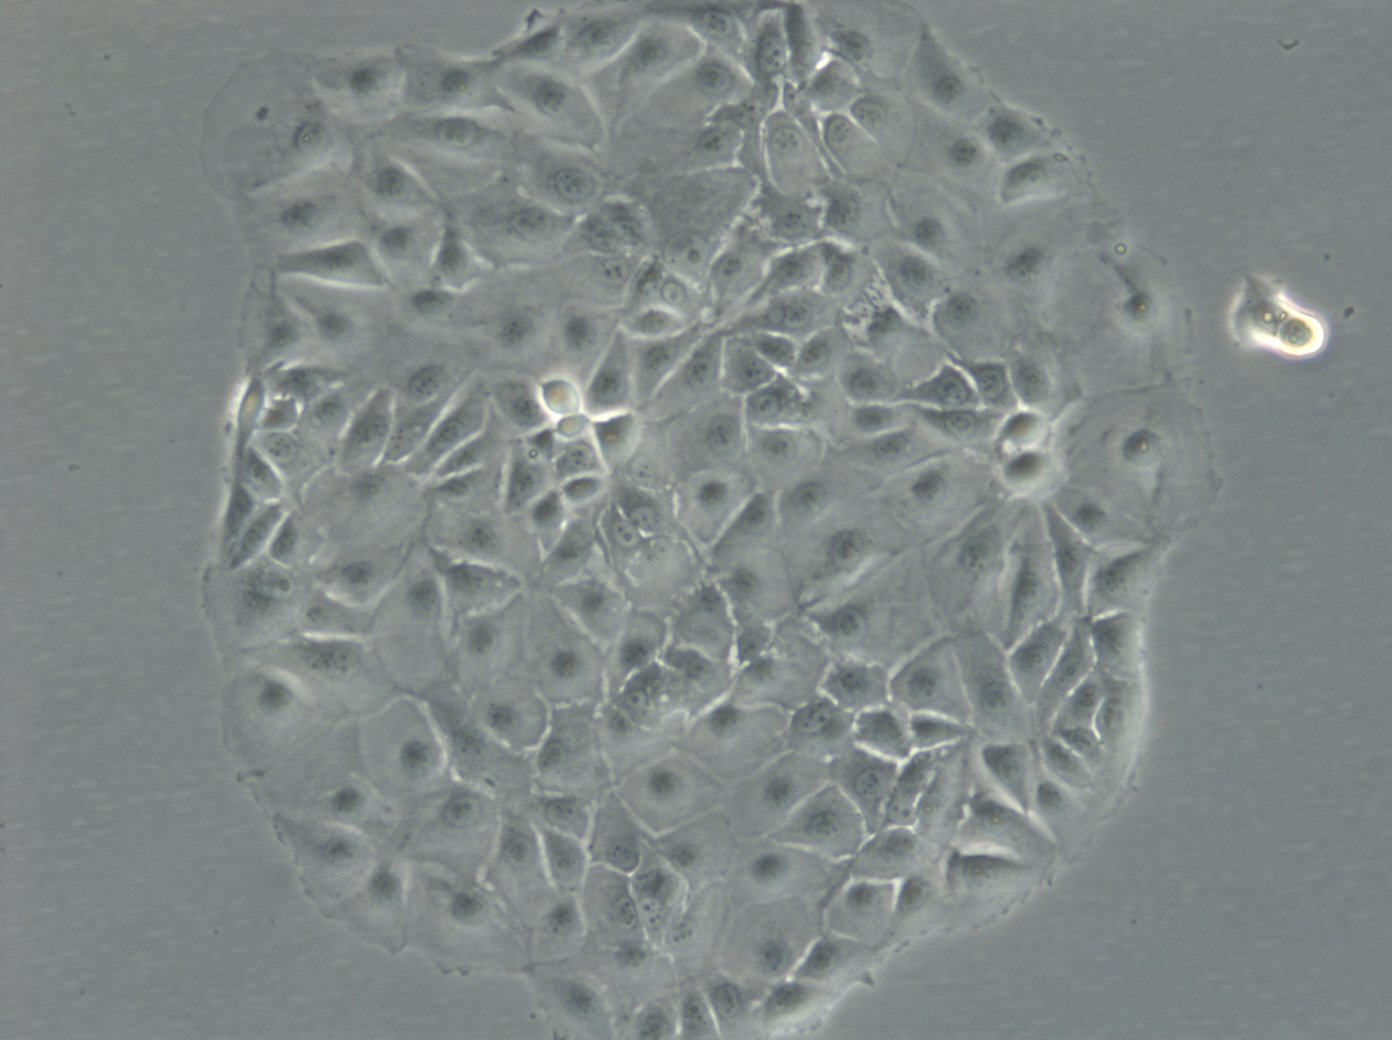 MCF-7 Cells